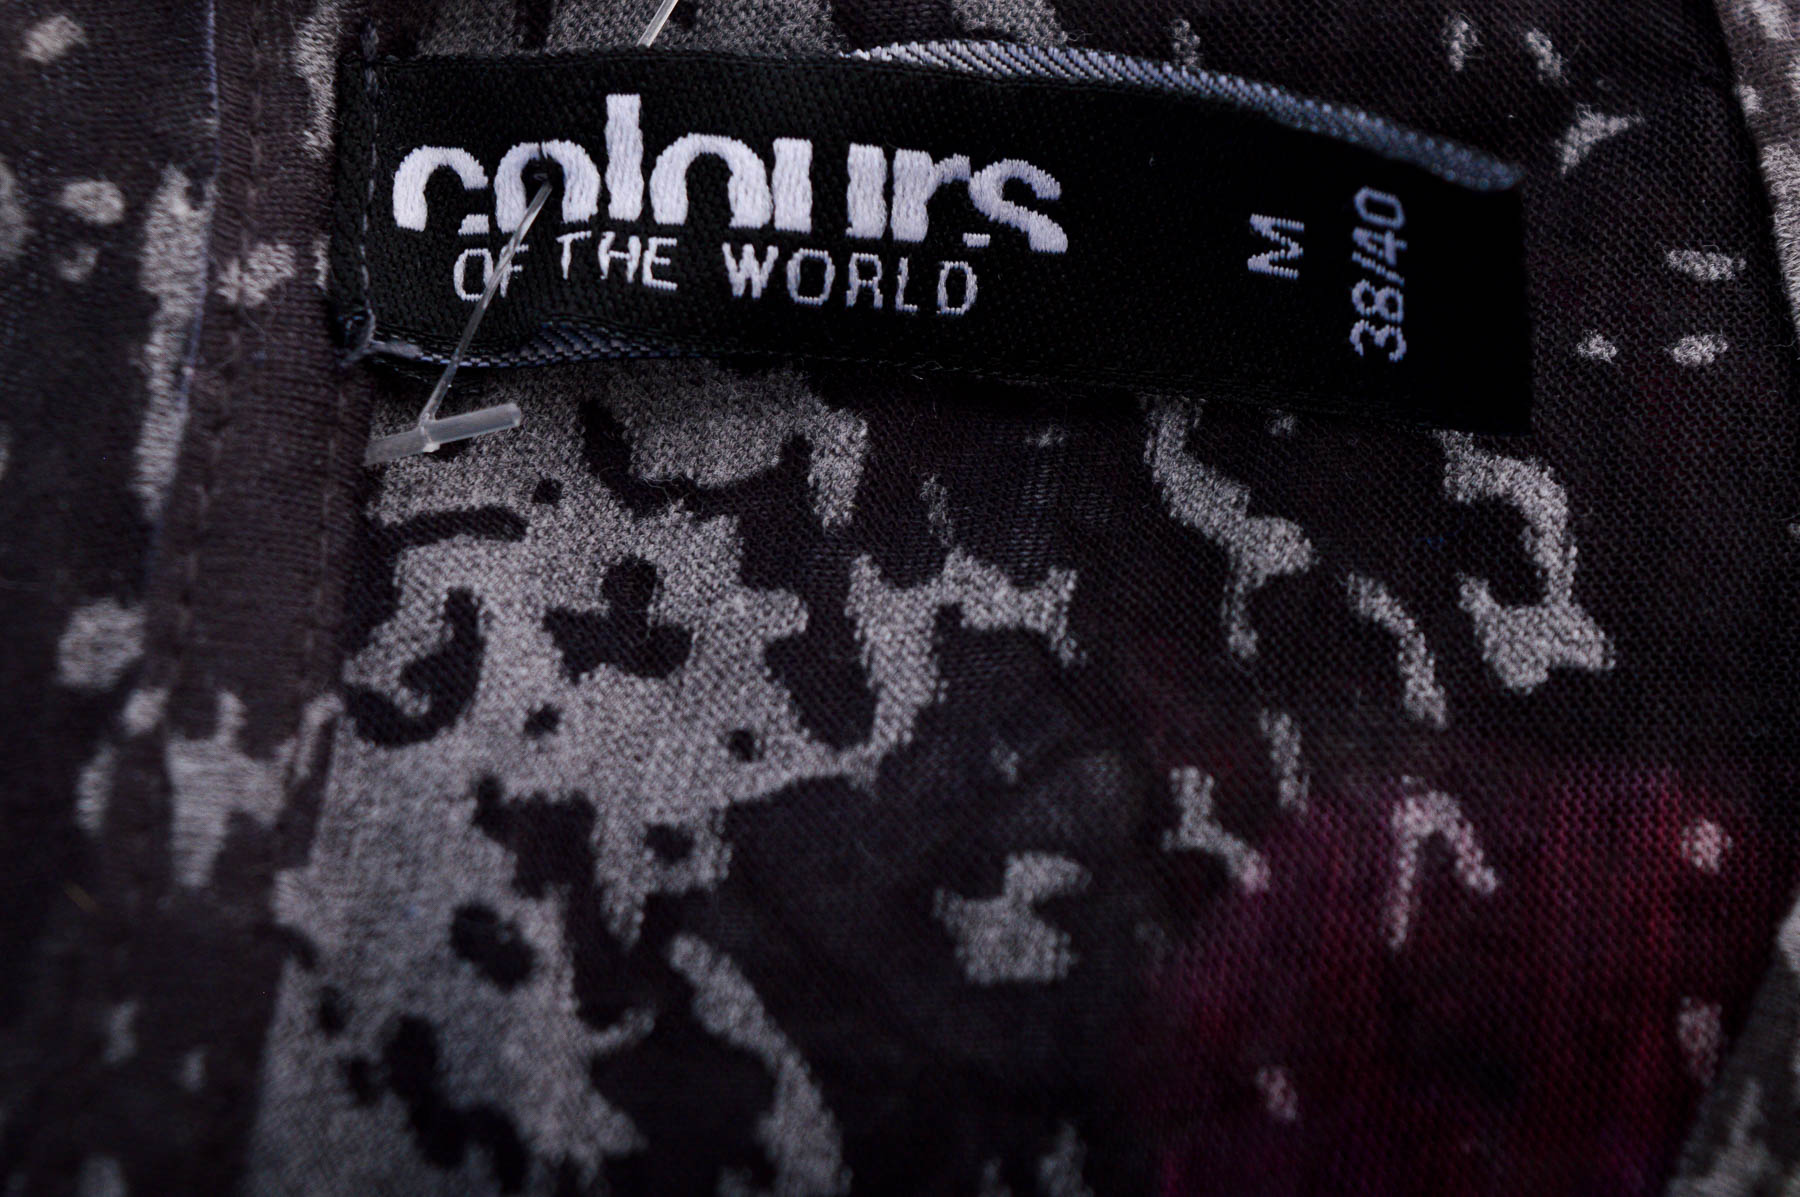 Дамска тениска - Colours of the world - 2